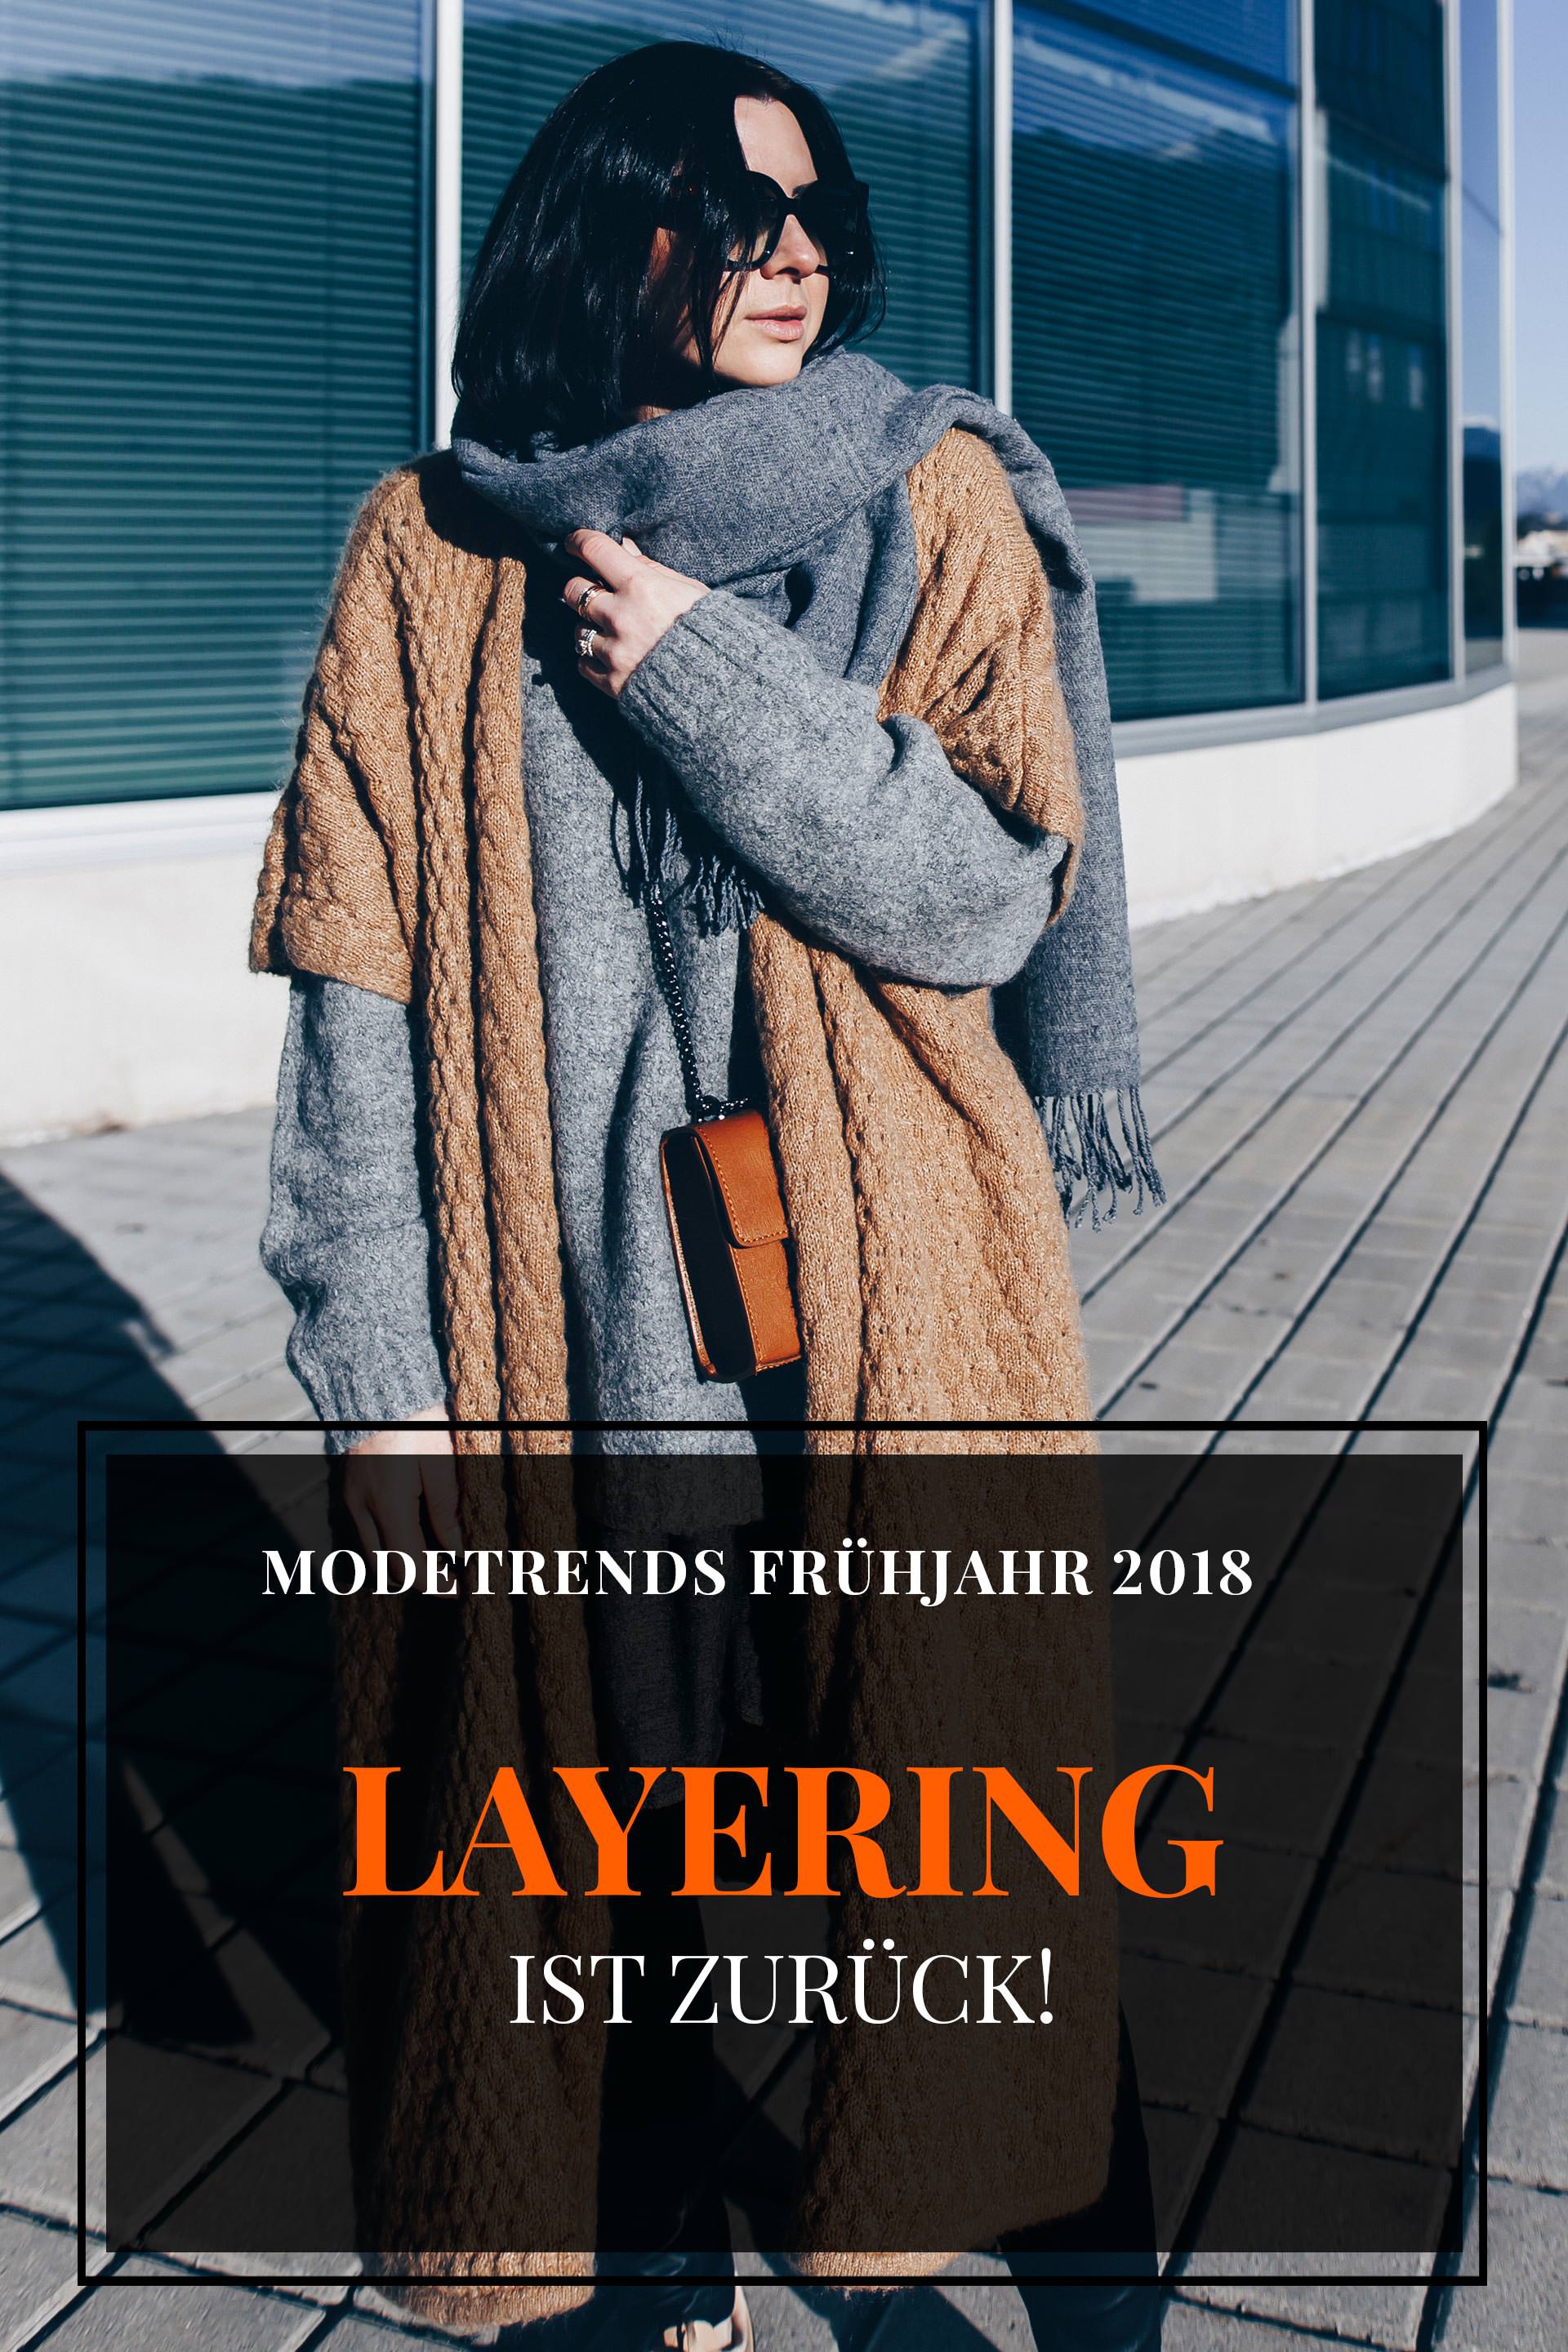 Modetrends Frühjahr 2018, Modetrends Frühling 2018, Modeblog, Was ist 2018 modern, was wird 2018 Trend, modetrends 2018, Layering Trend, Lagenlook Outfits, Fashion Blog, www.whoismocca.com